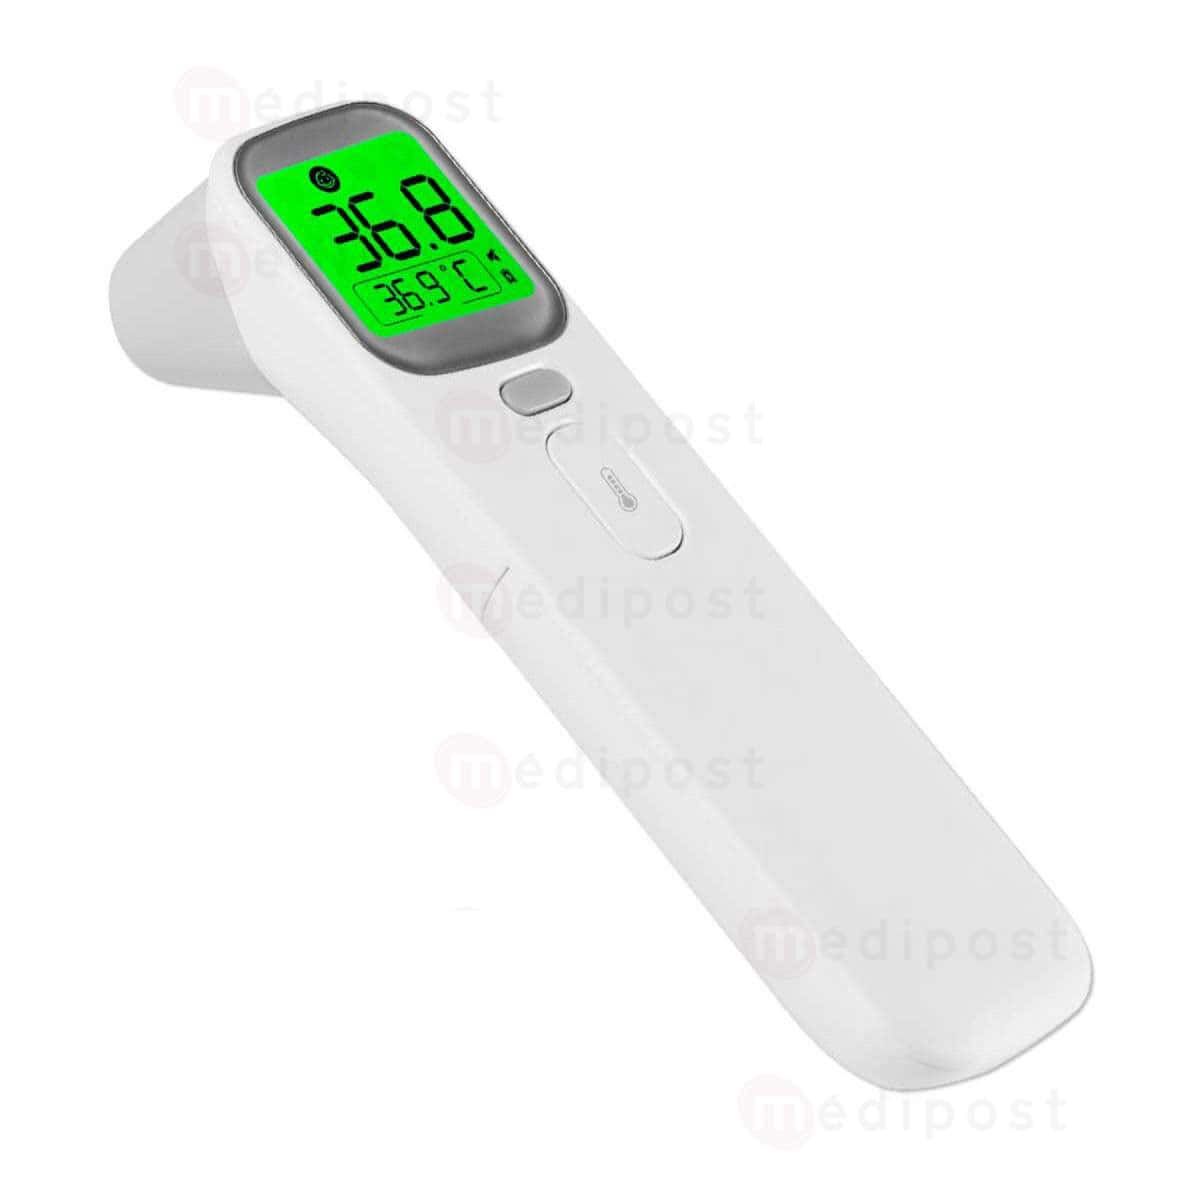 Medek Thermomètre Infrarouge Frontal et Auriculaire